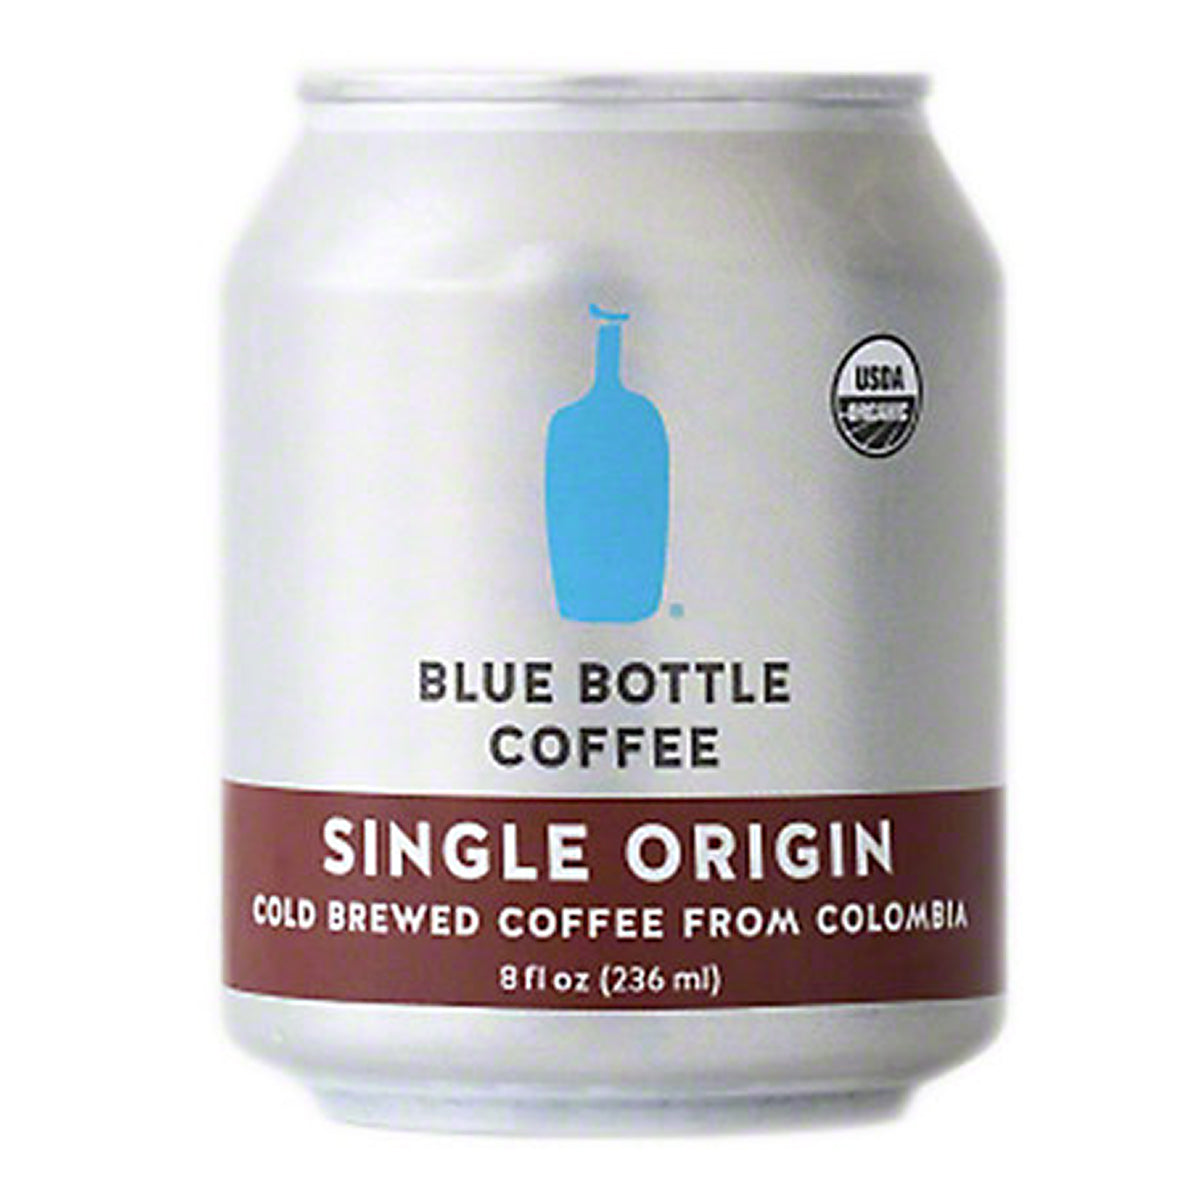 blue bottle cold brew coffee single origin colombia - 8oz